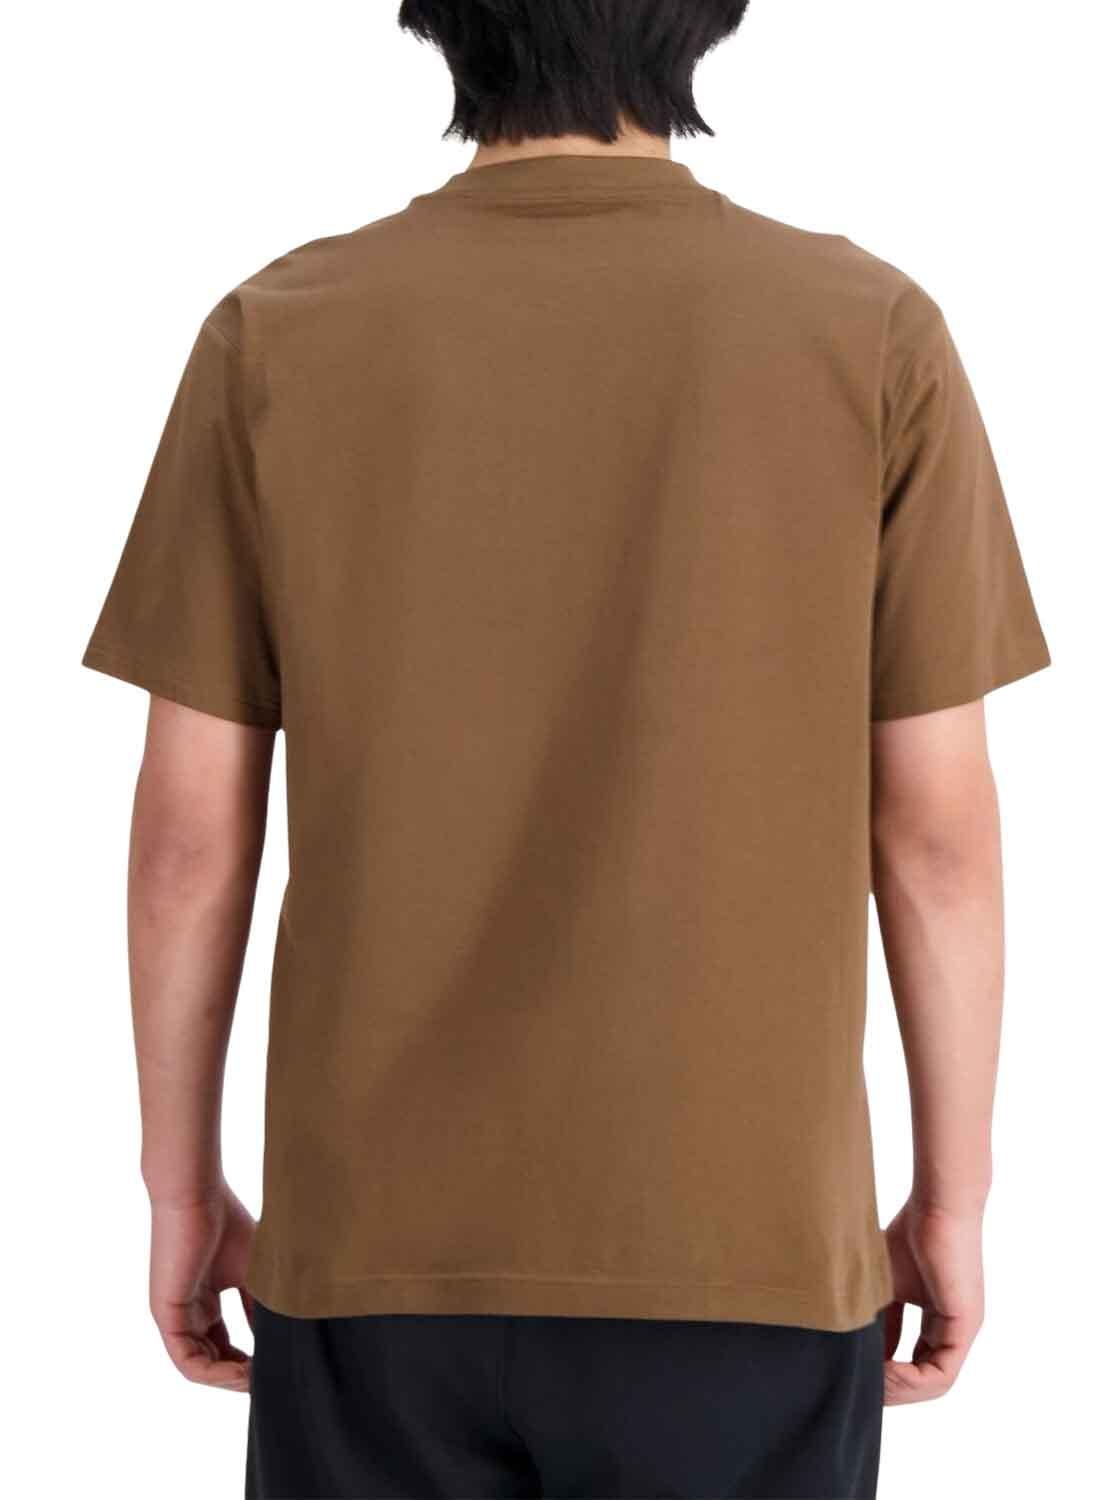 T-Shirt New Balance Stacked Marrone Uomo